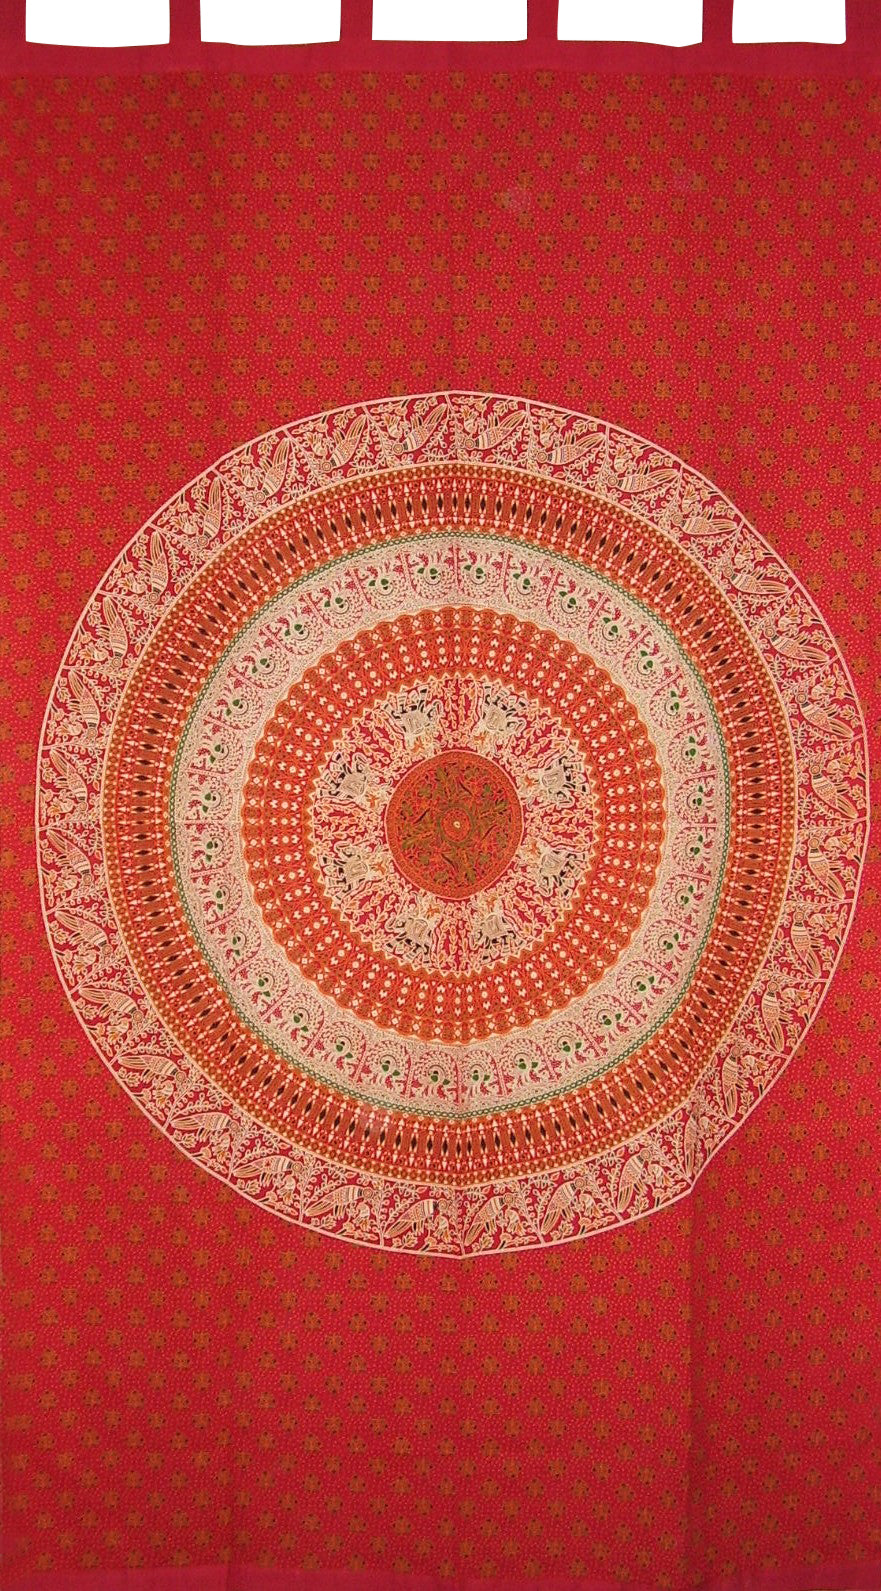 Mandala Tab Top verhoverhopaneeli puuvilla 50" x 90" punainen